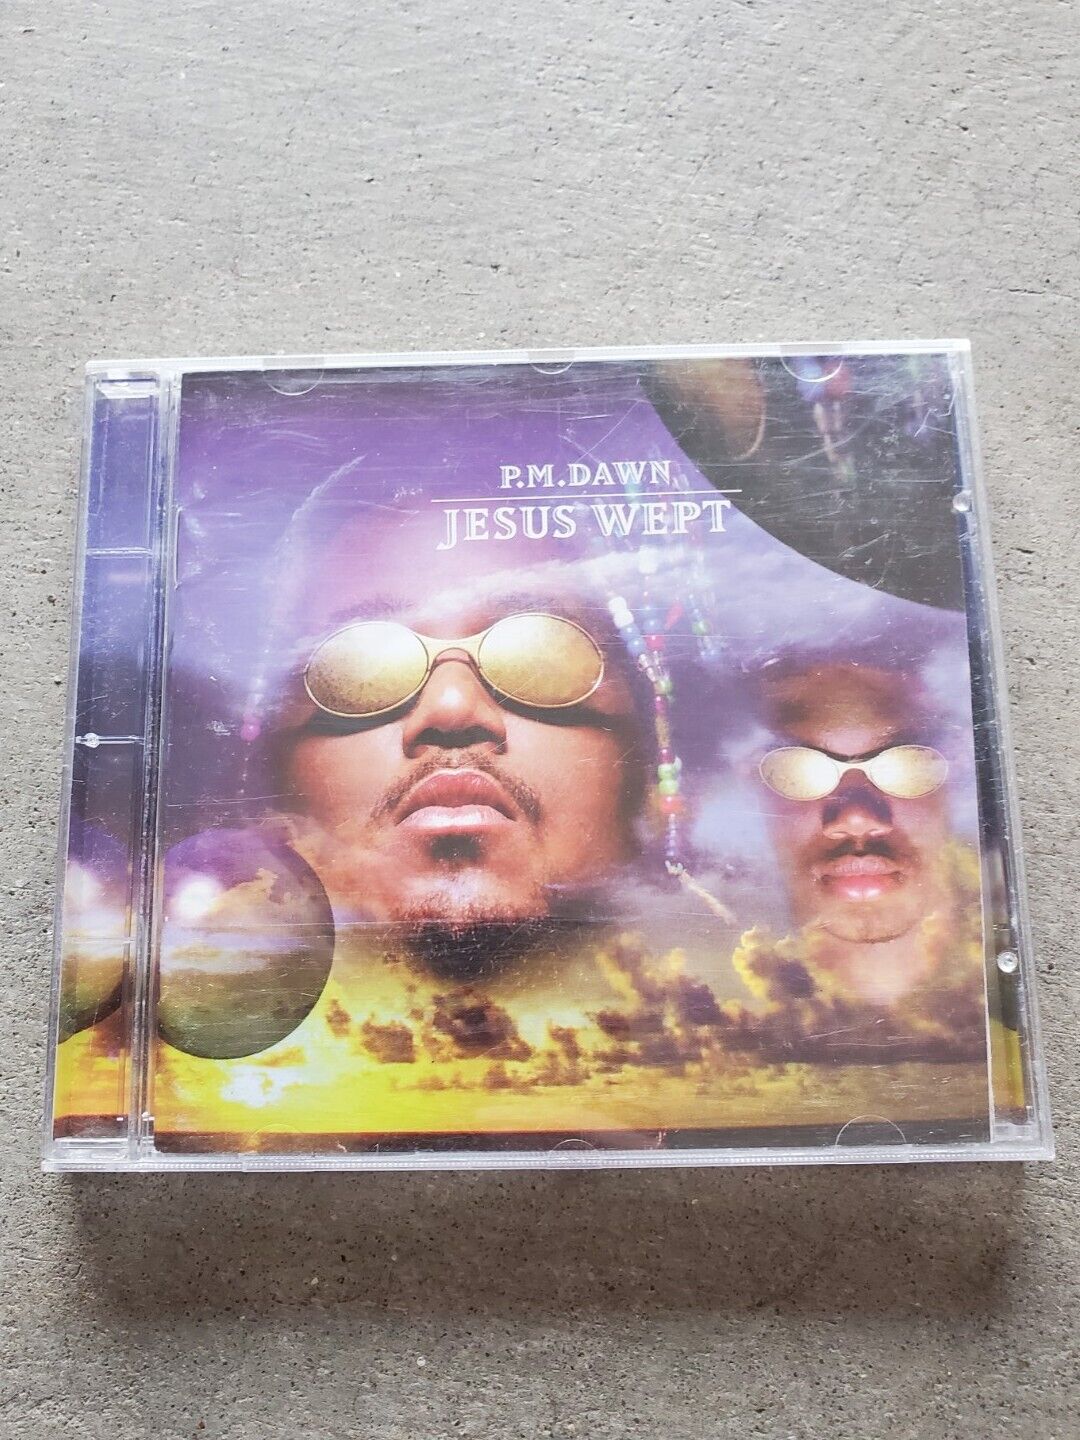 Jesus wept - Audio CD By PM Dawn - VERY GOOD